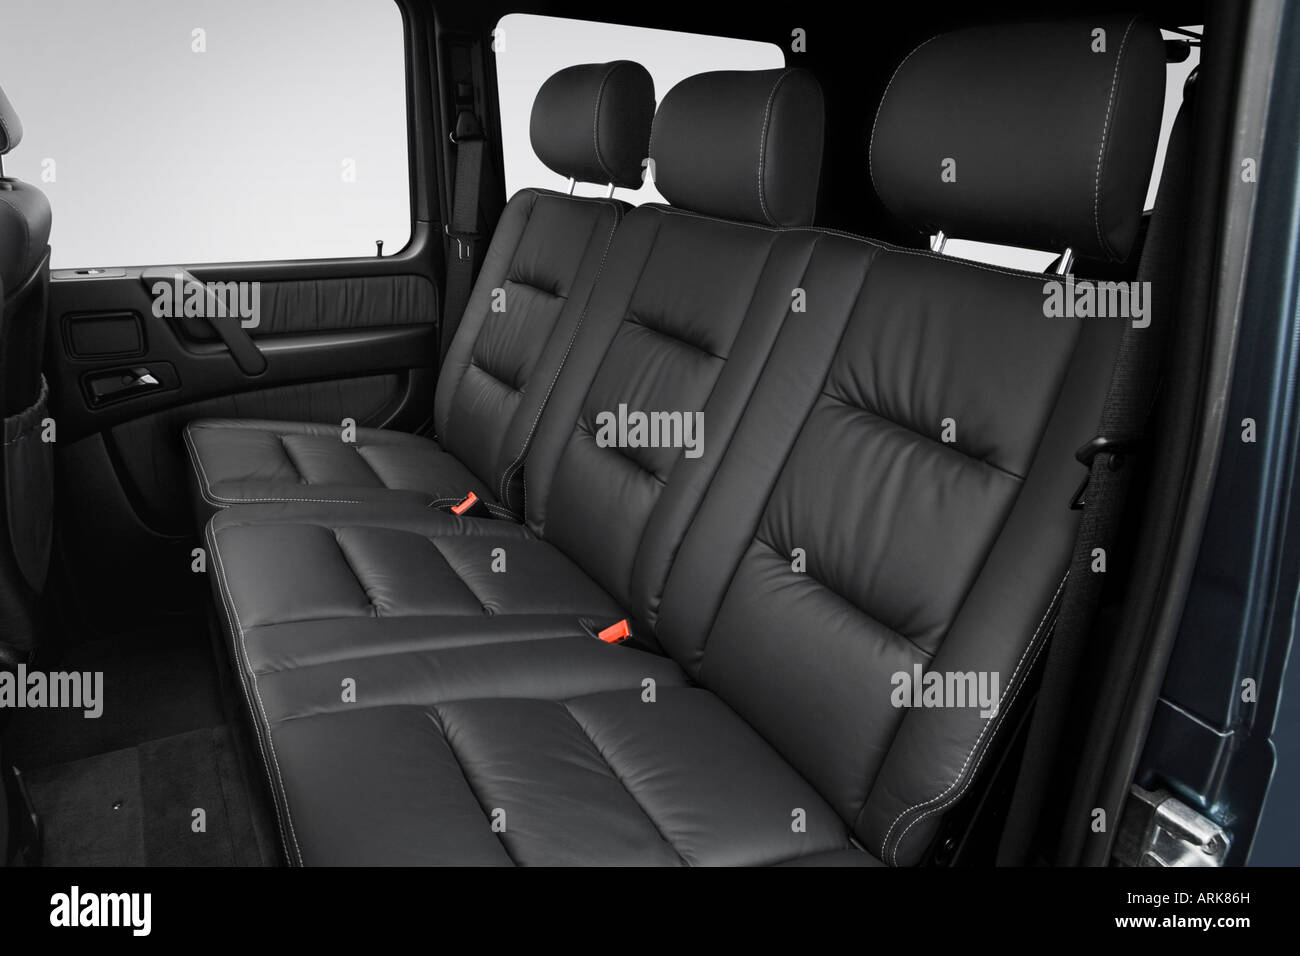 08 Mercedes Benz G Class G55 Amg Kompressor In Gray Rear Seats Stock Photo Alamy